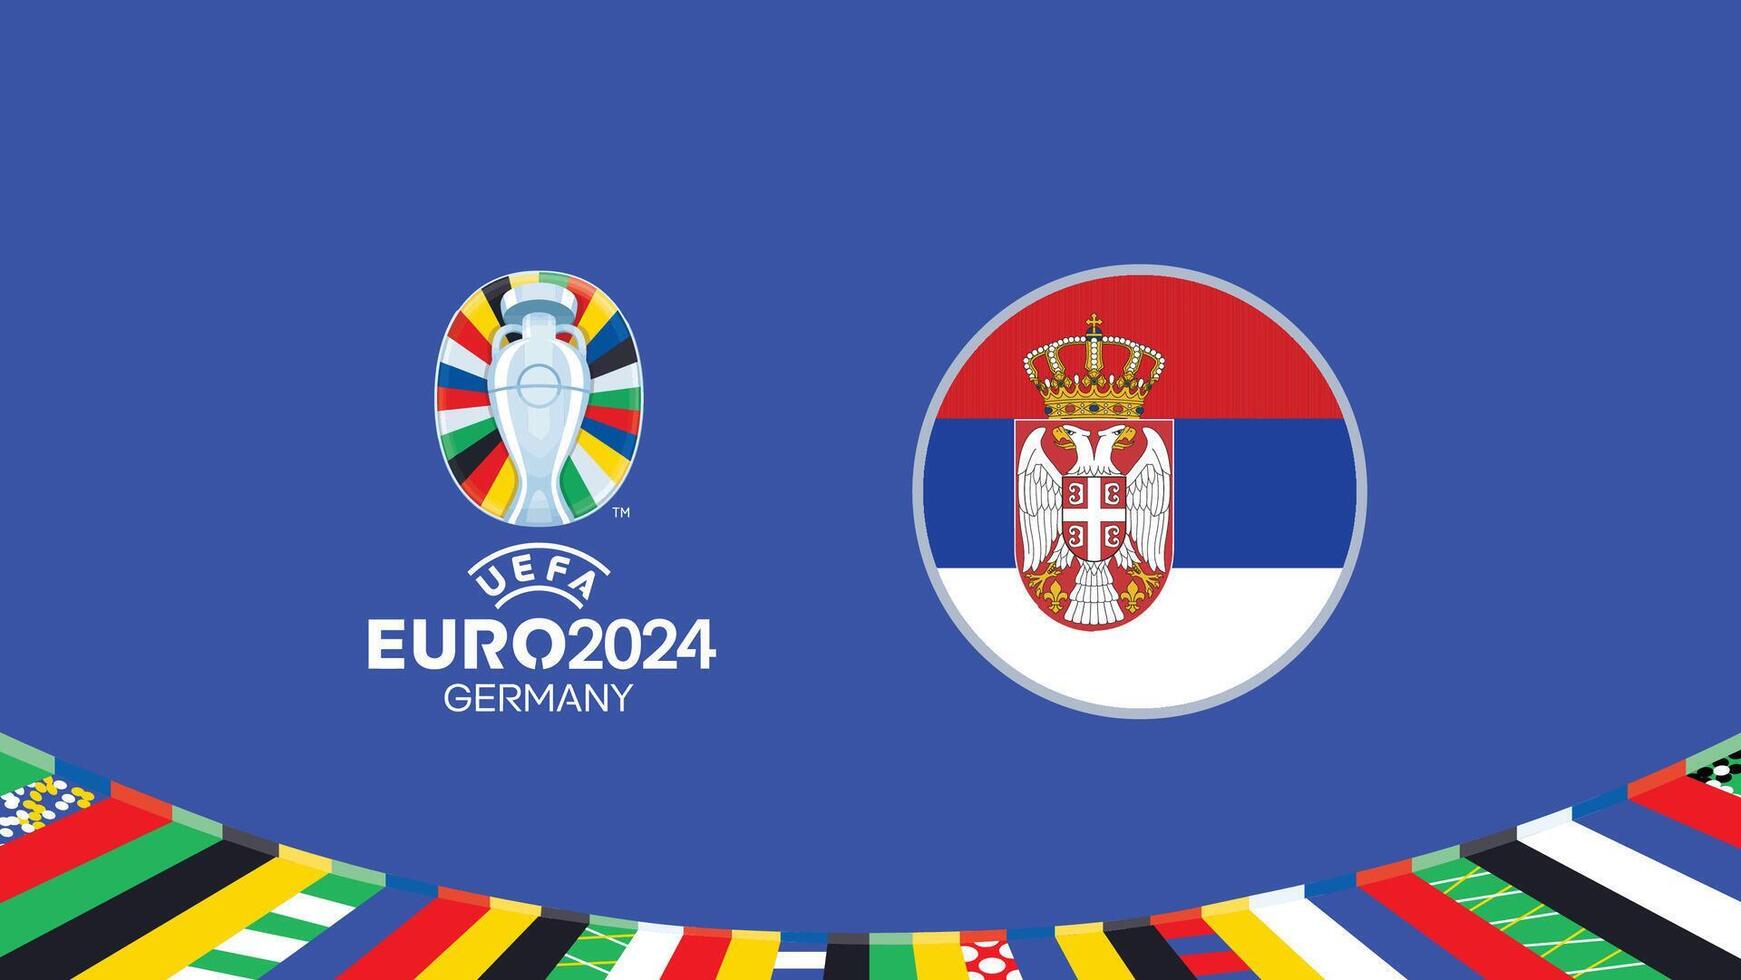 euro 2024 Duitsland Servië vlag teams ontwerp met officieel symbool logo abstract landen Europese Amerikaans voetbal illustratie vector